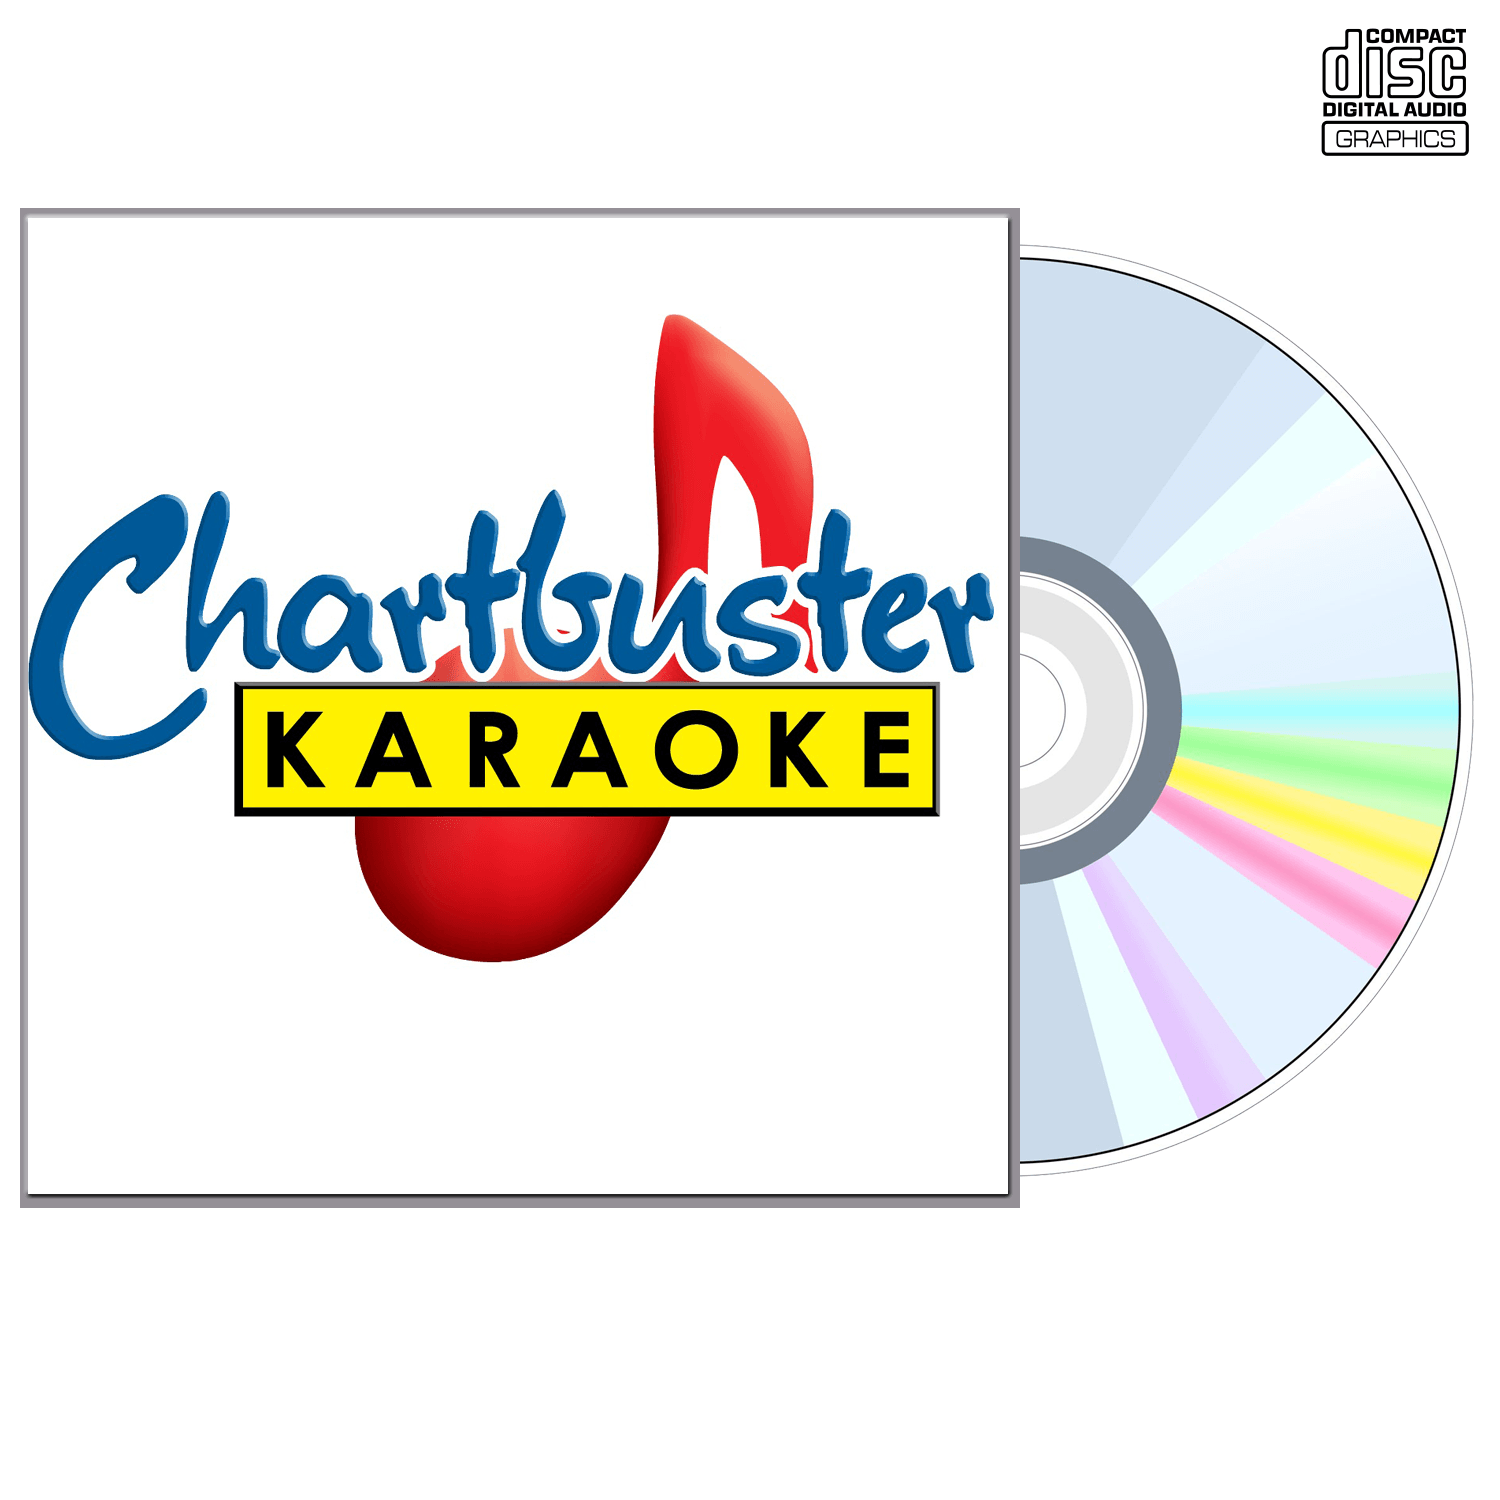 Al Dexter,his Troopers - CD+G - Chartbuster Karaoke - Karaoke Home Entertainment